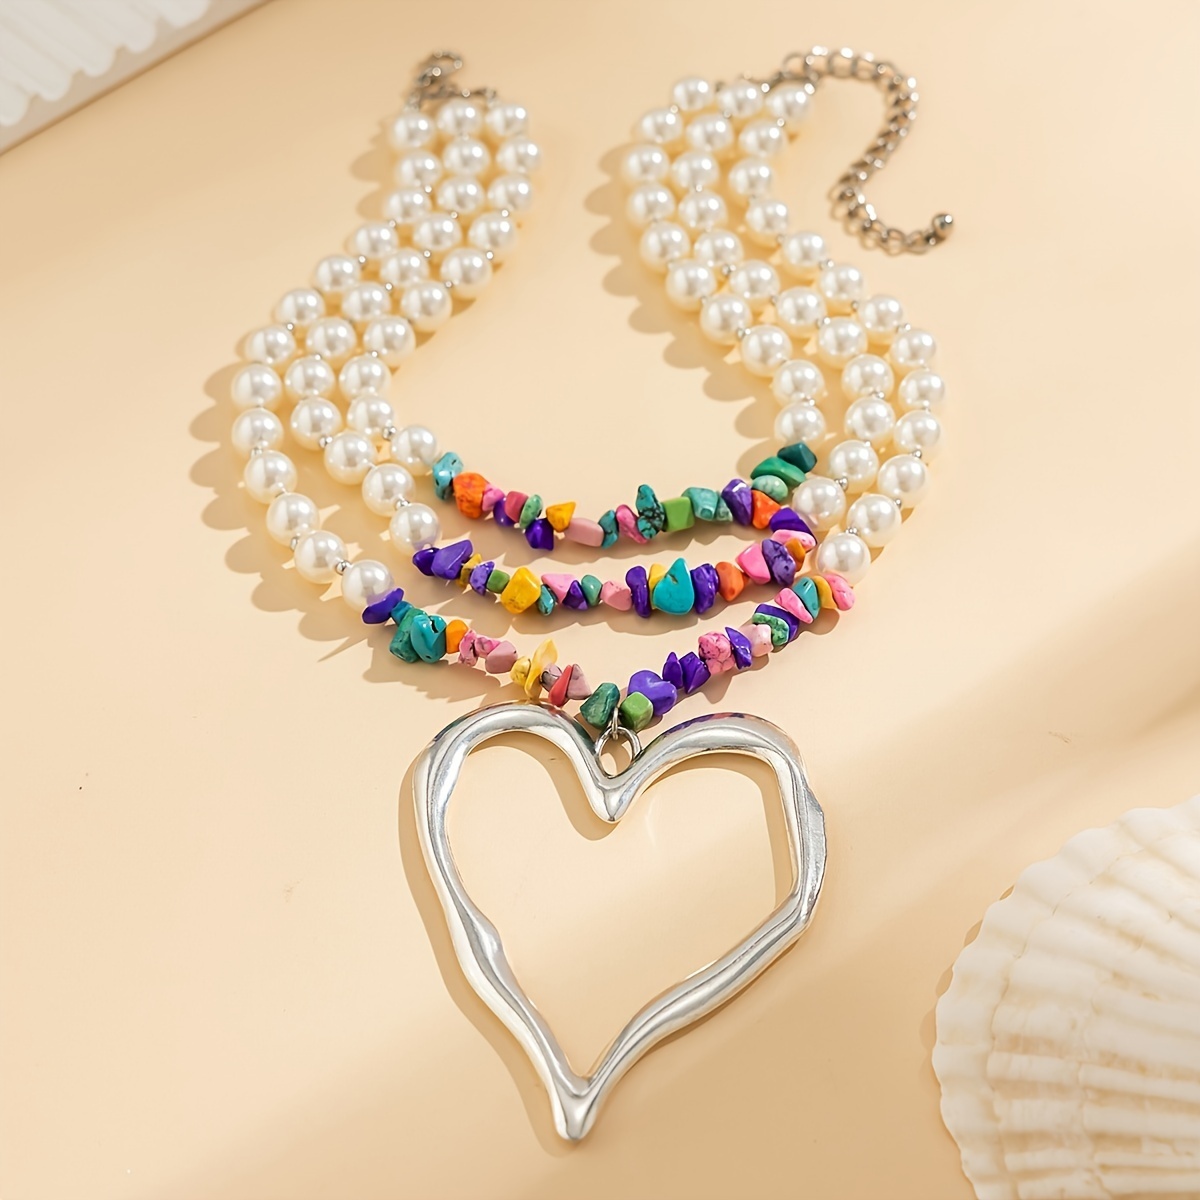 Irregular Love Heart Pendant Multilayer Necklace